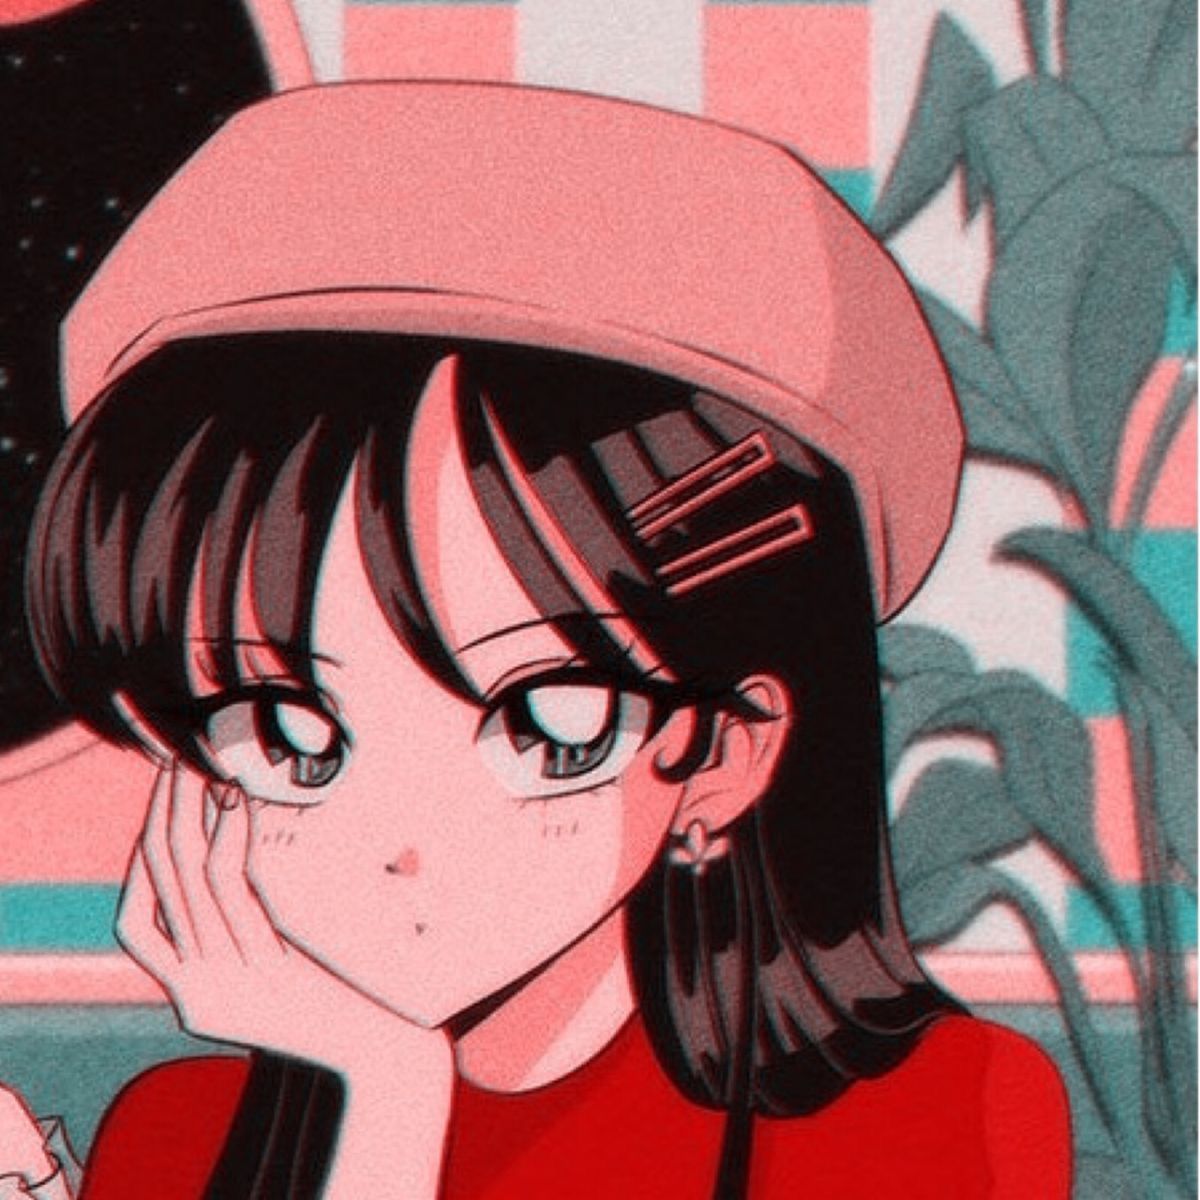 sailor moon matching pfp. Aesthetic anime, Anime best friends, Cute anime wallpaper